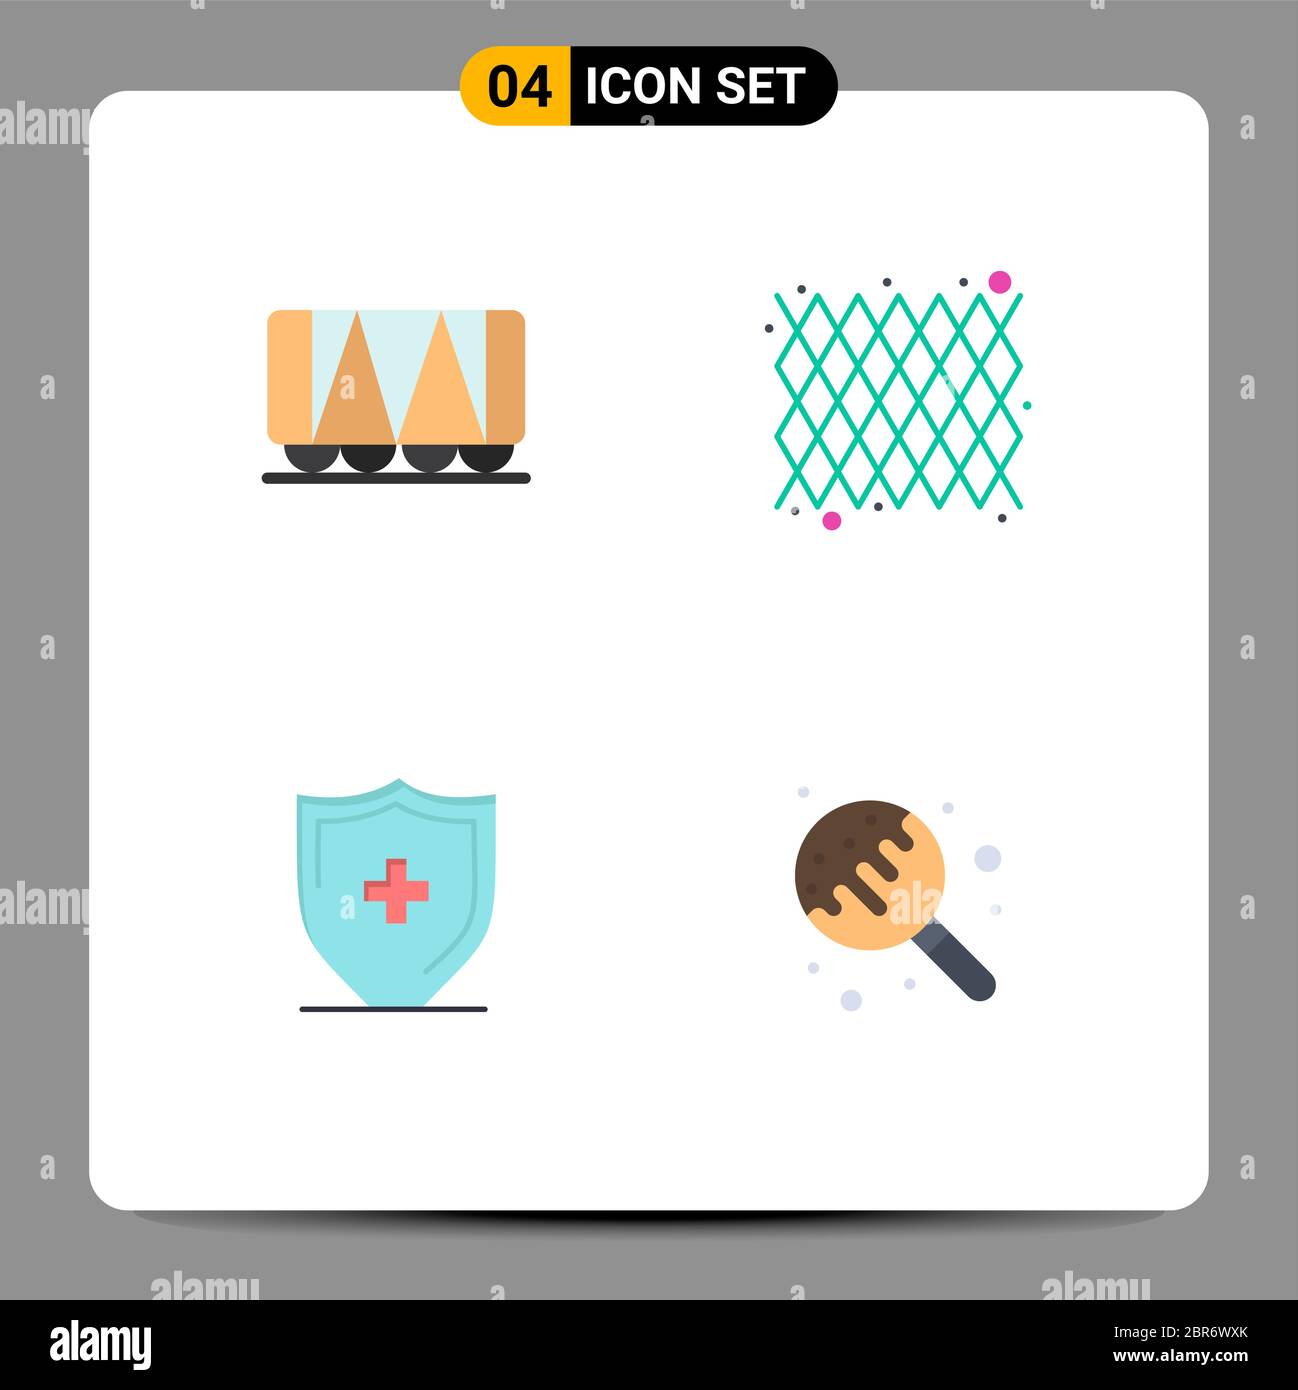 Pack de 4 symboles universels de chemin de fer, de planche, de carnaval, de motif, de bonbons modifiables Vector Design Elements Illustration de Vecteur